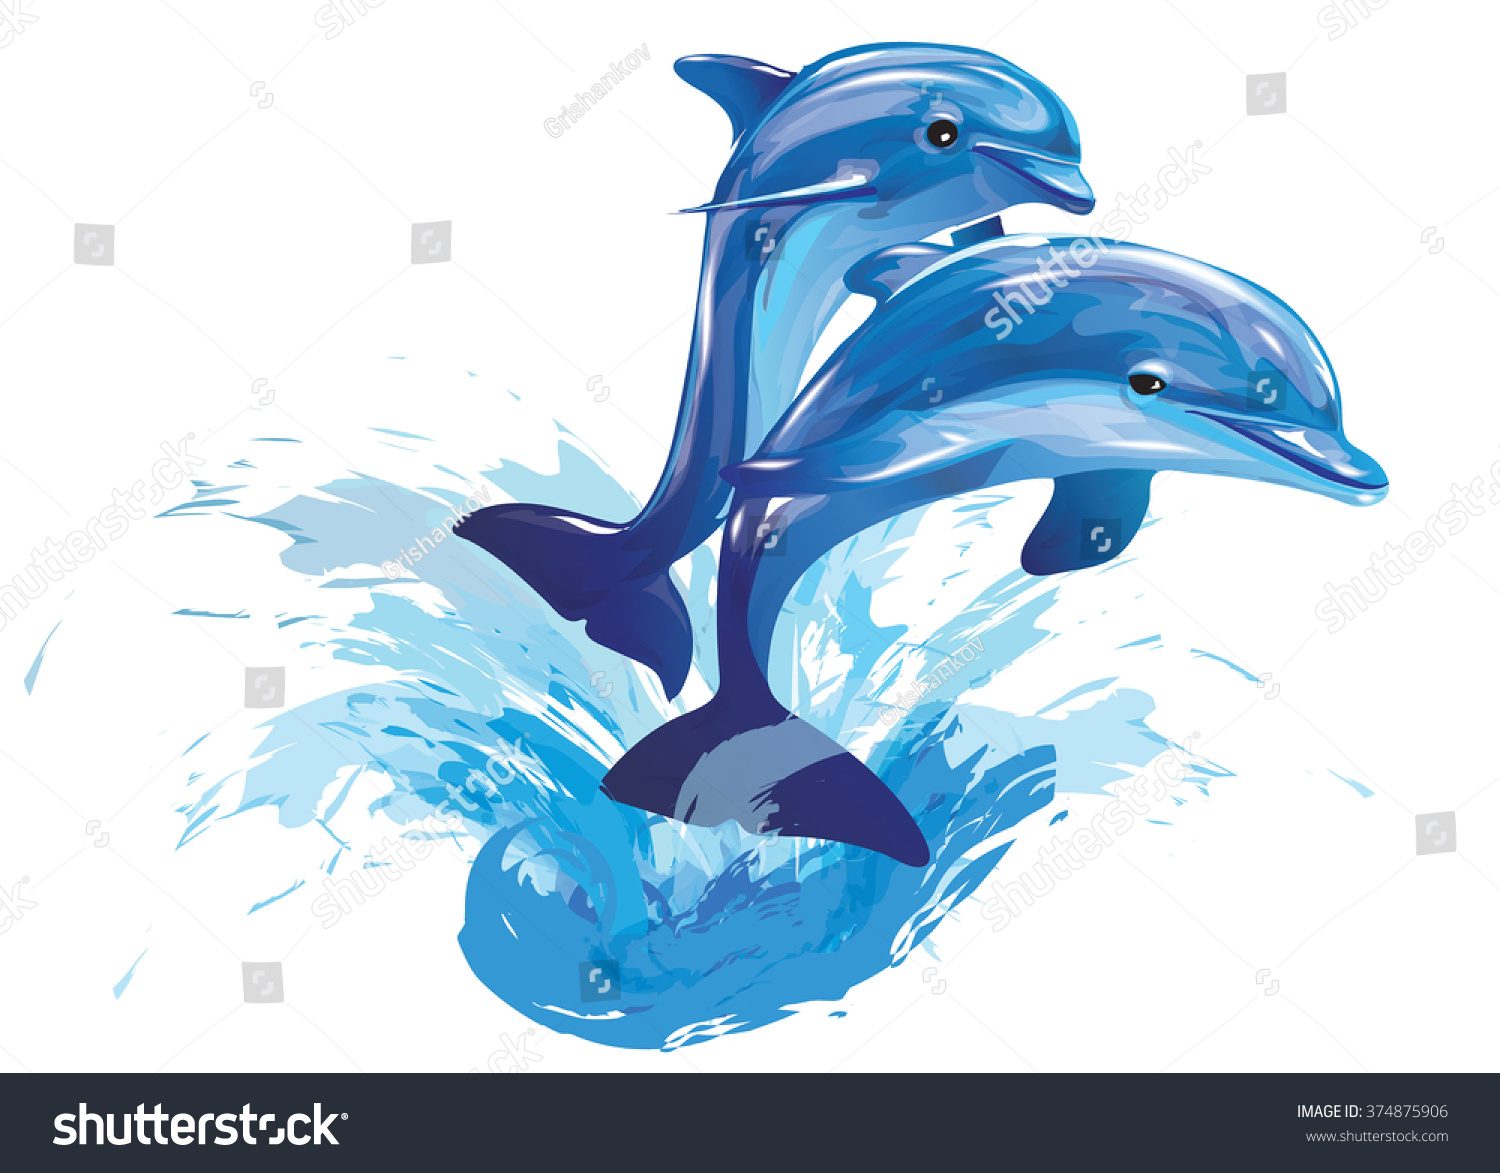 Рисунок дельфина на волне